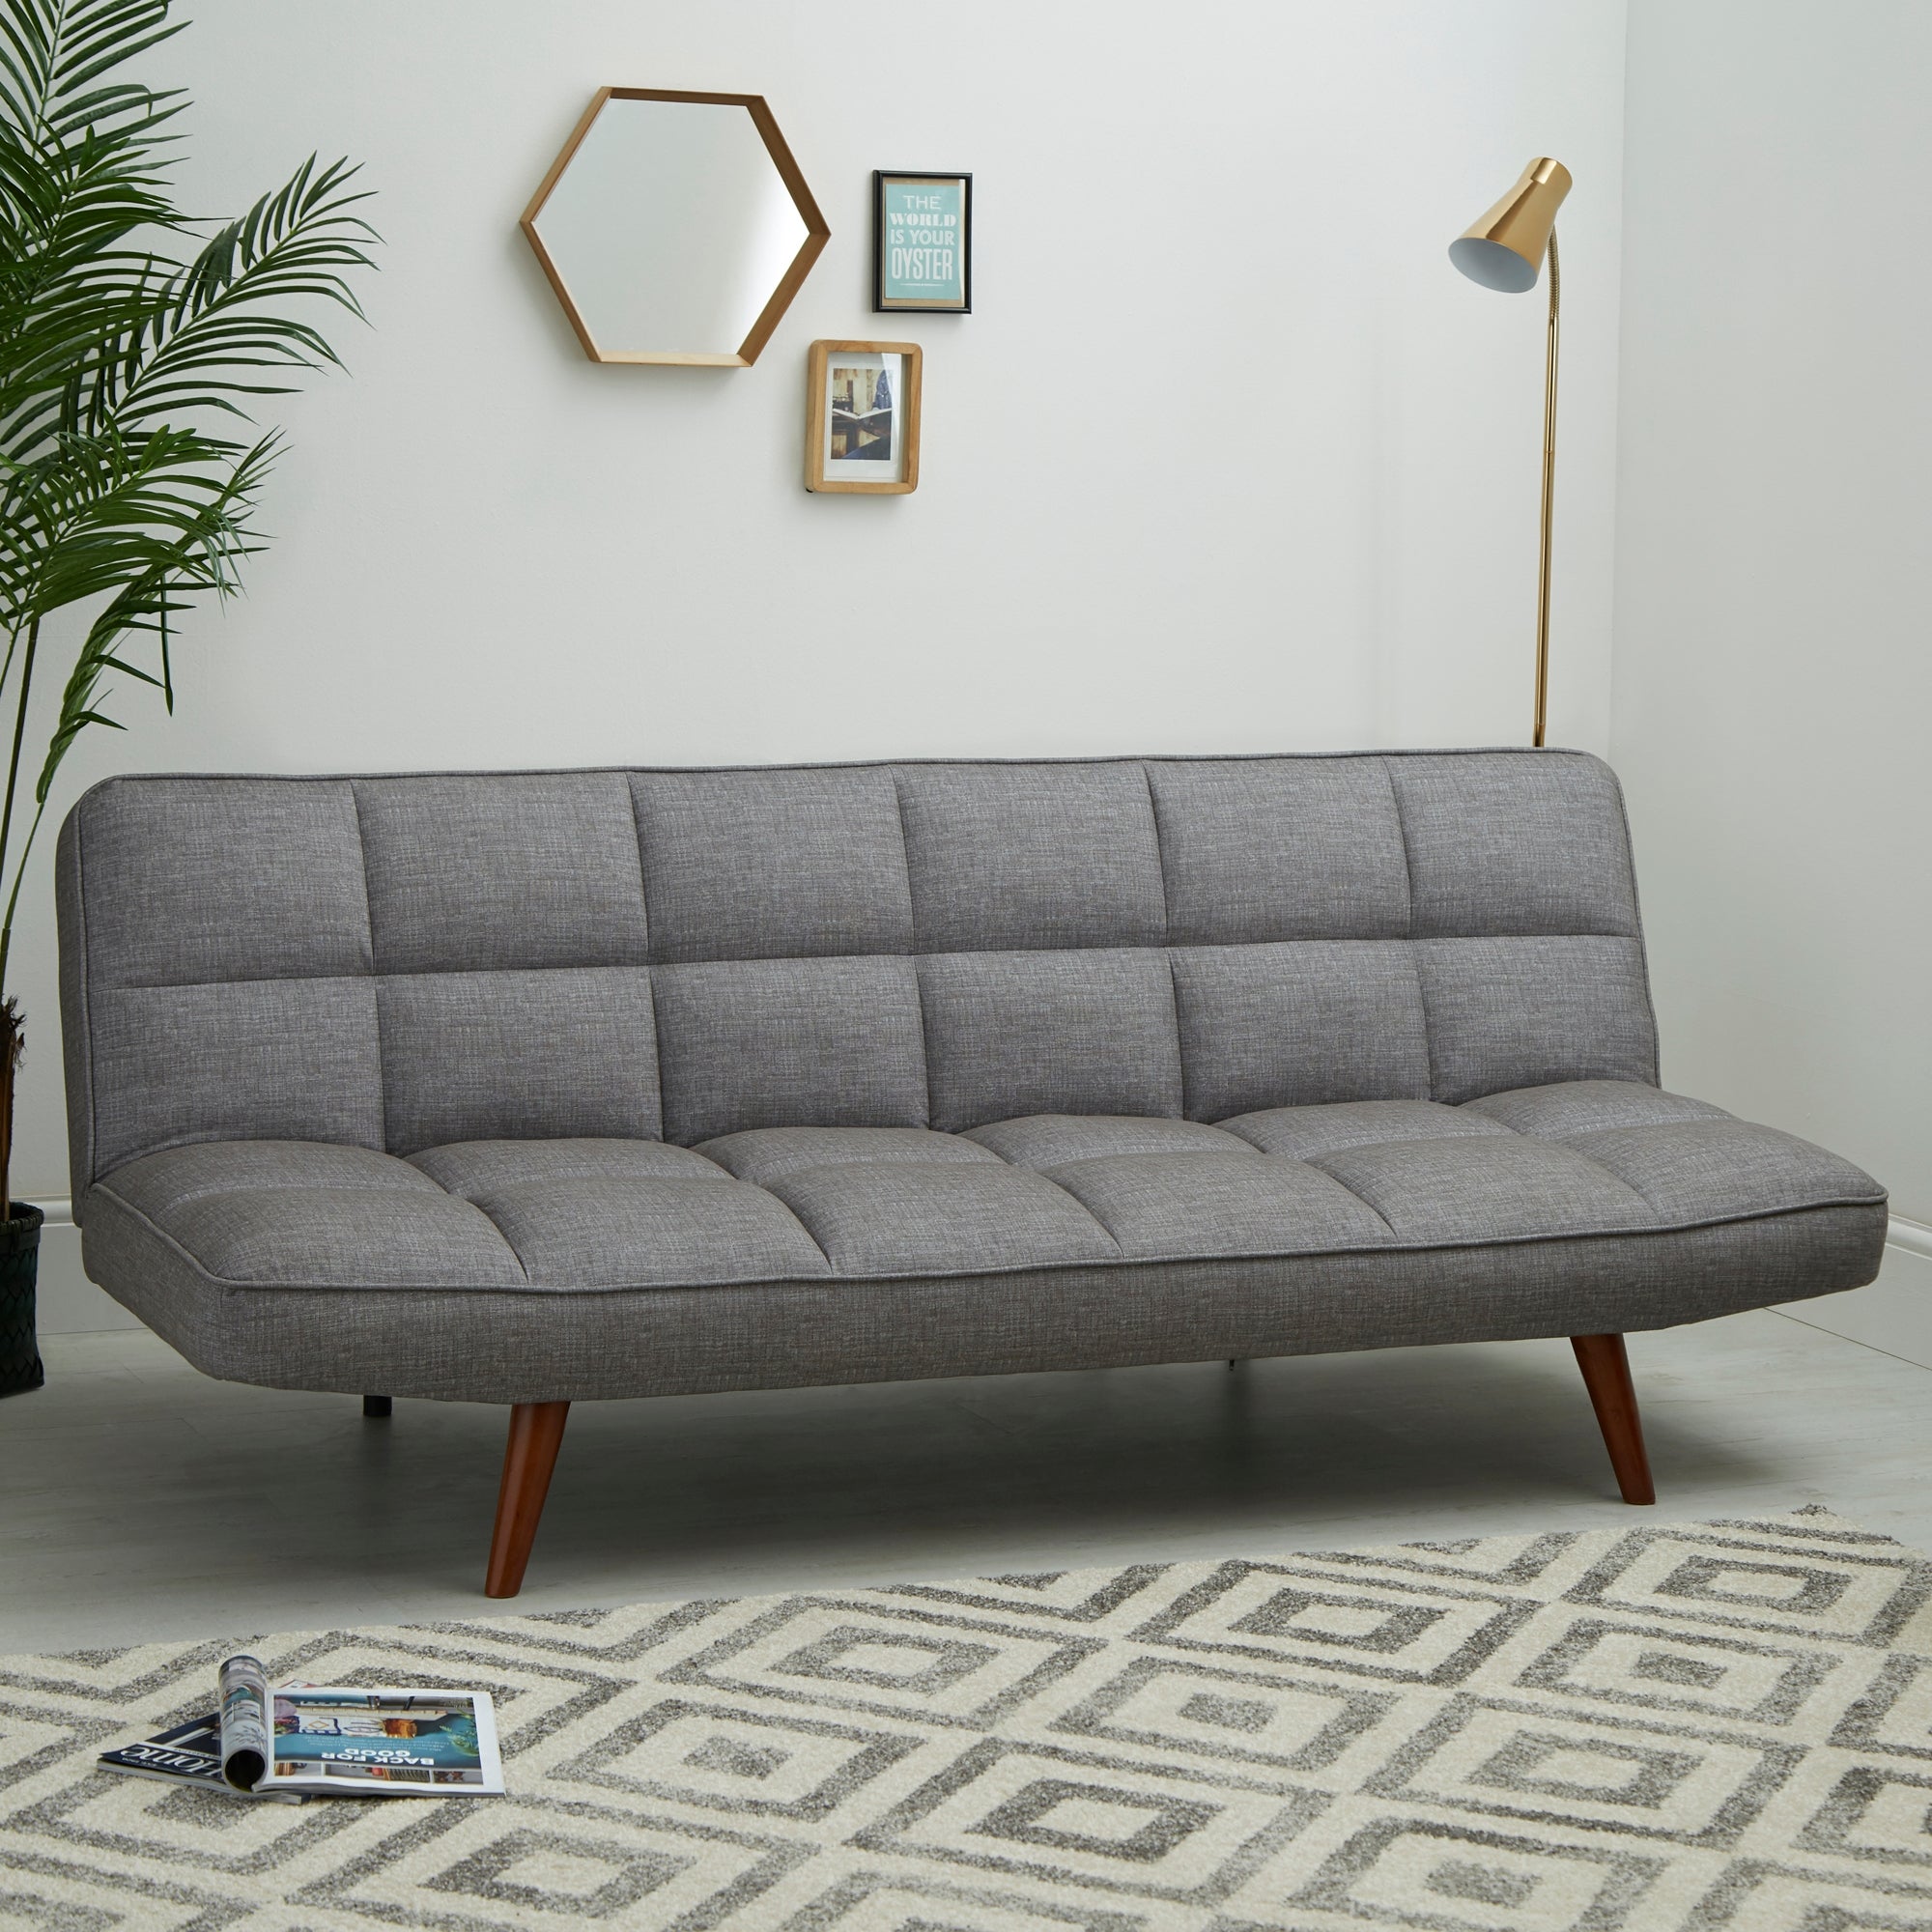 Xander Colour Pop Clic Clac Grey sofa bed